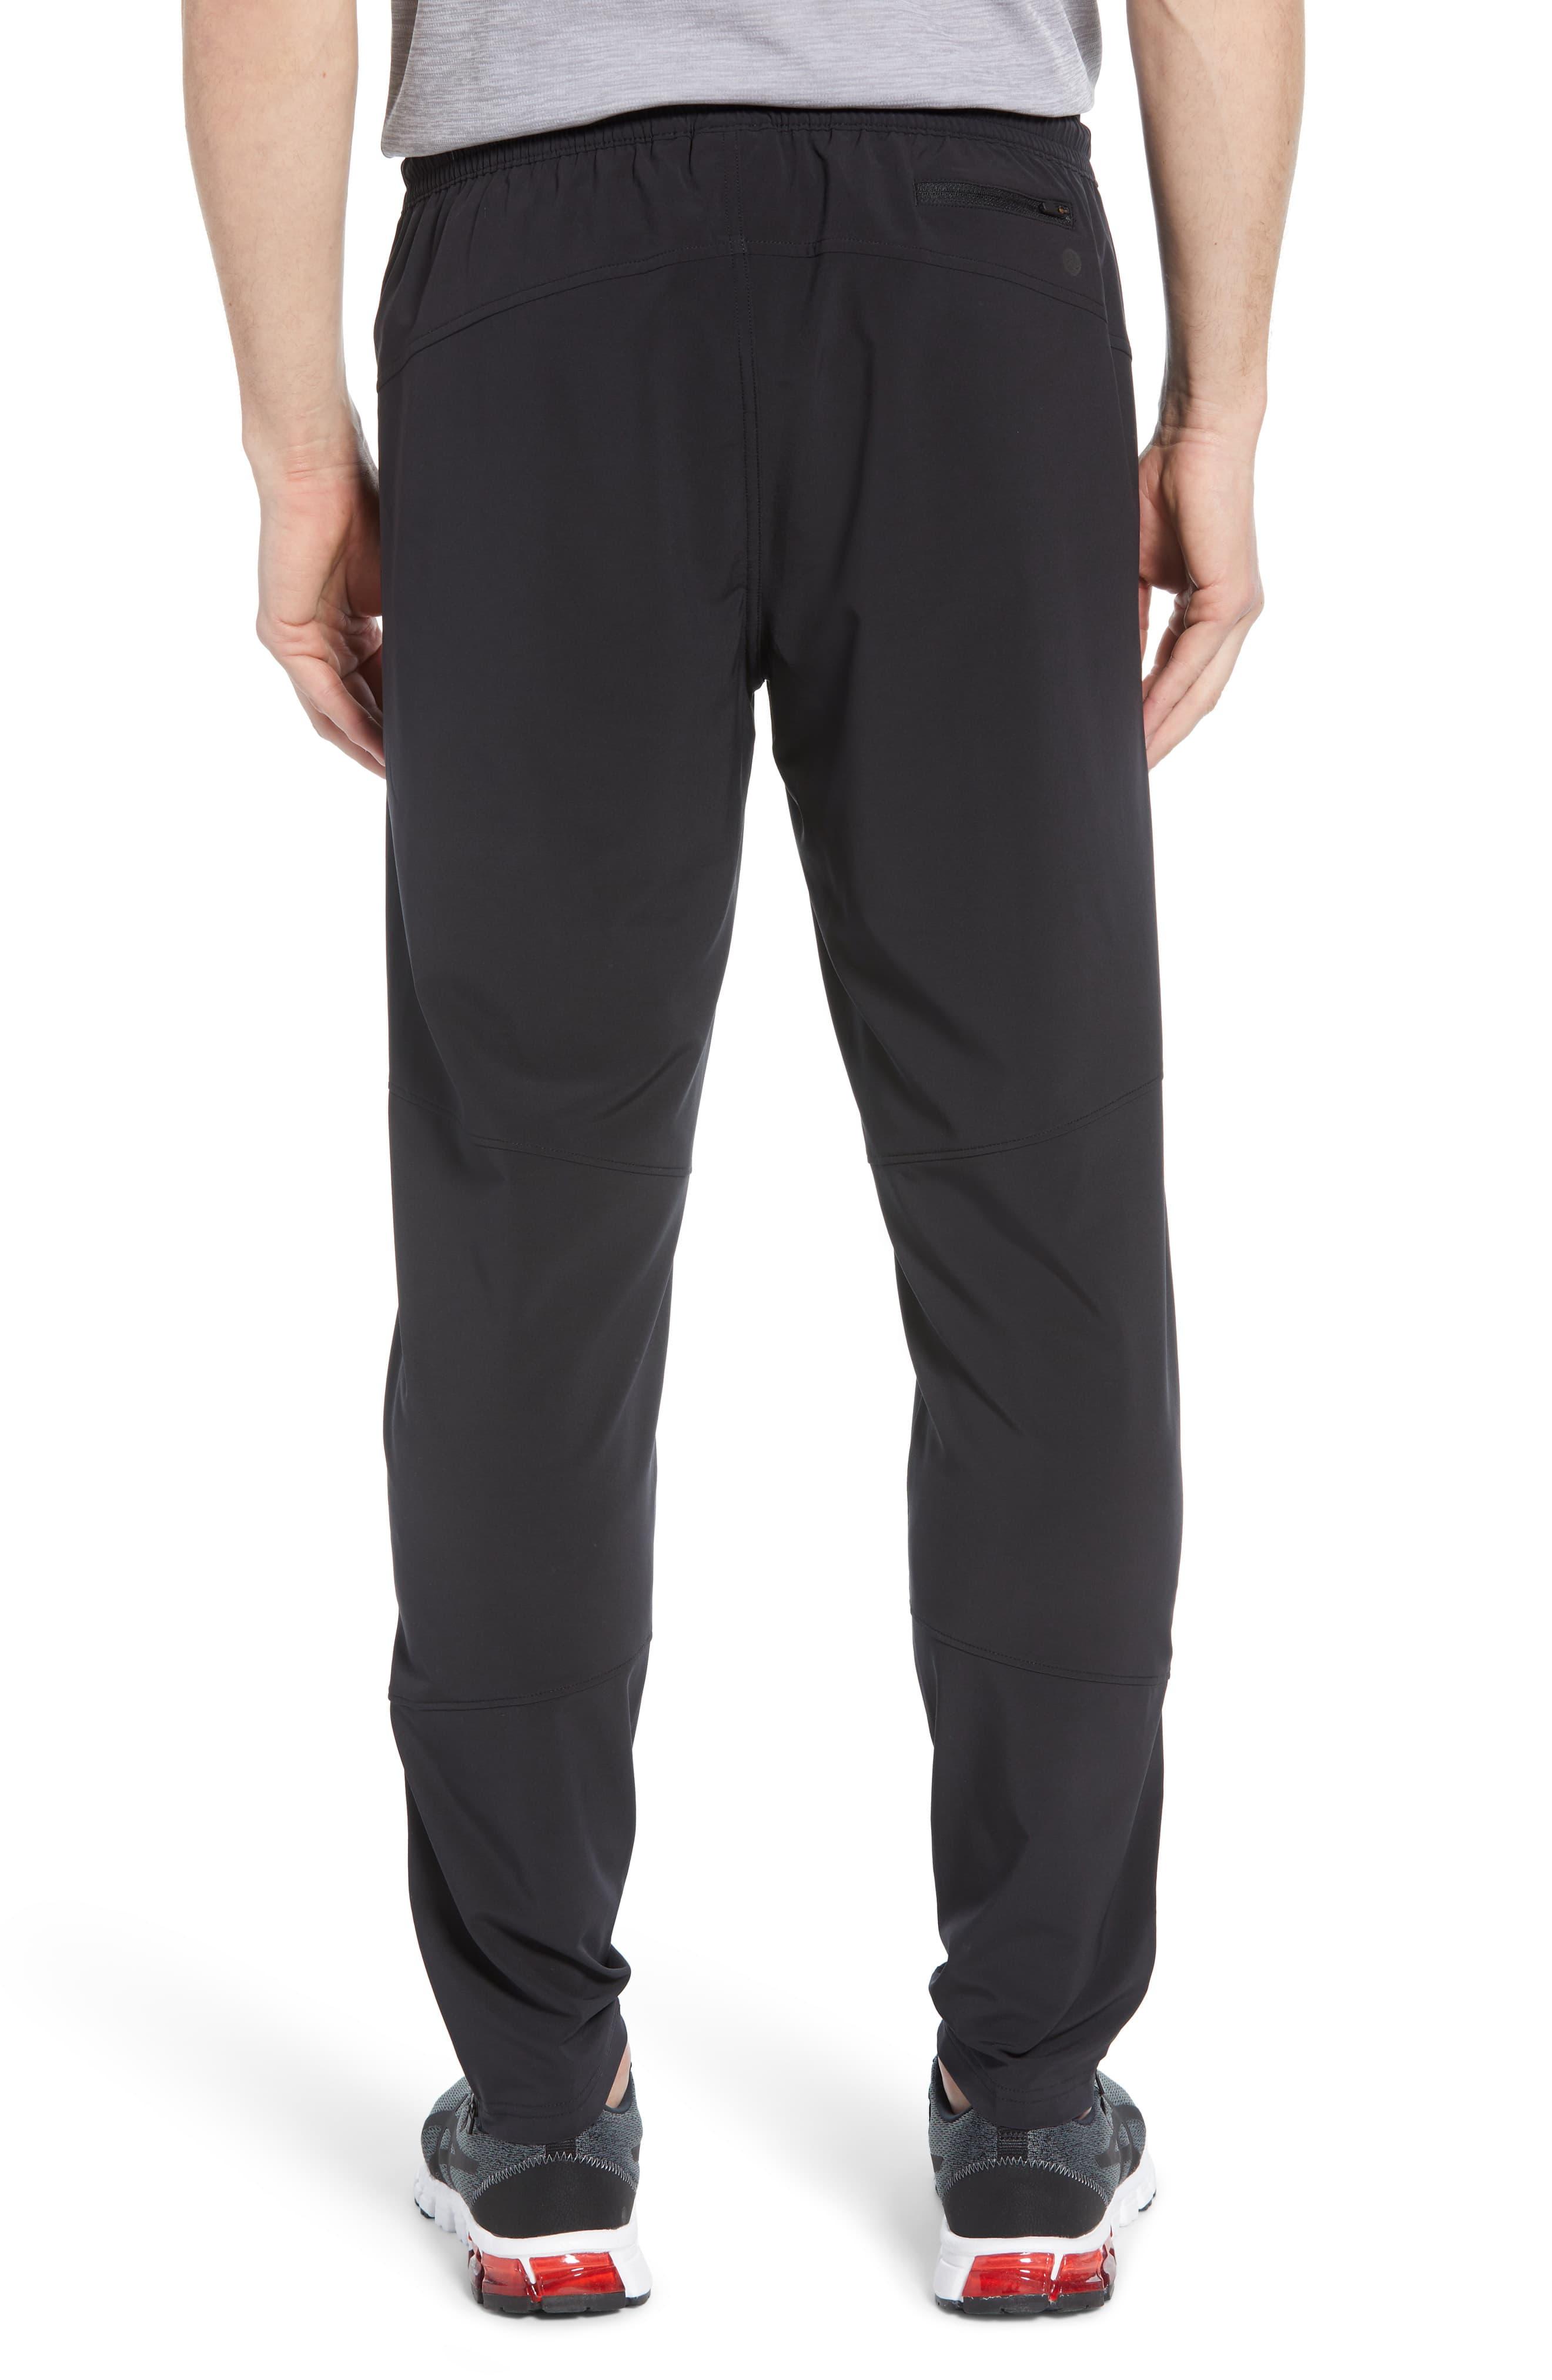 Zella Core Stretch Woven Pants in Black for Men - Lyst